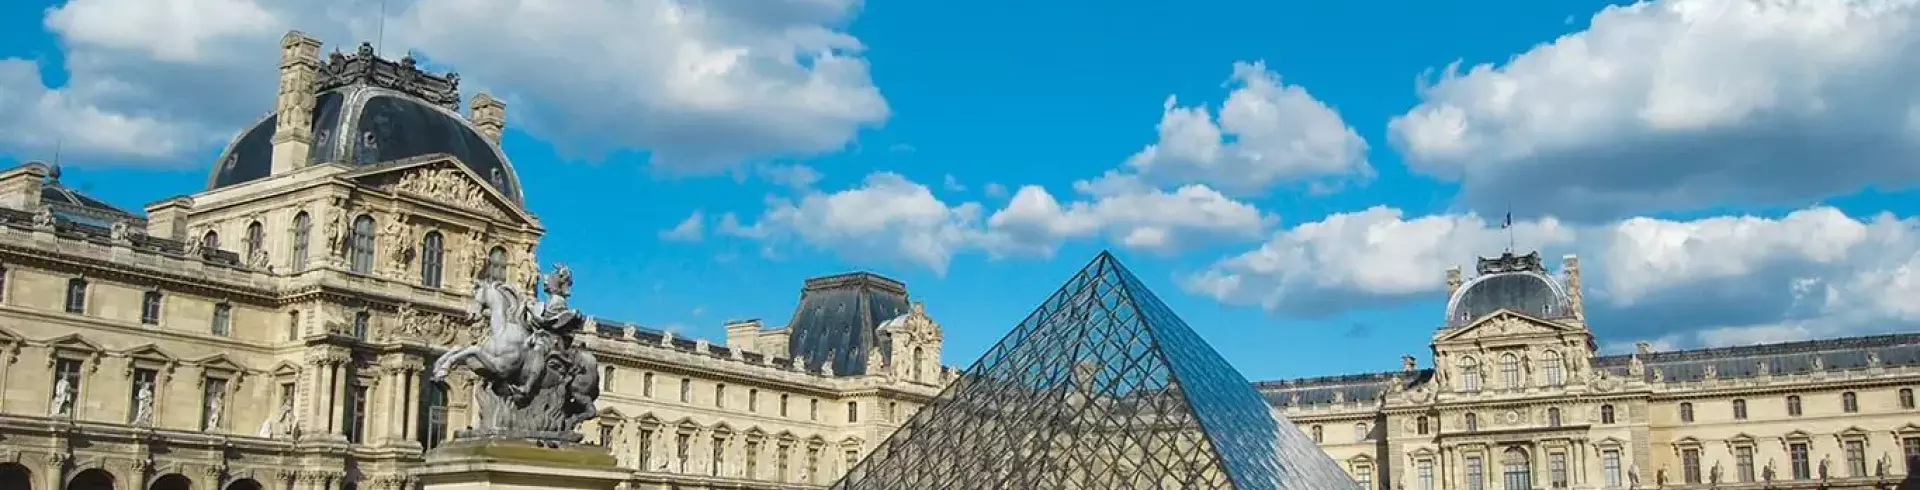 Sekrety Paryża